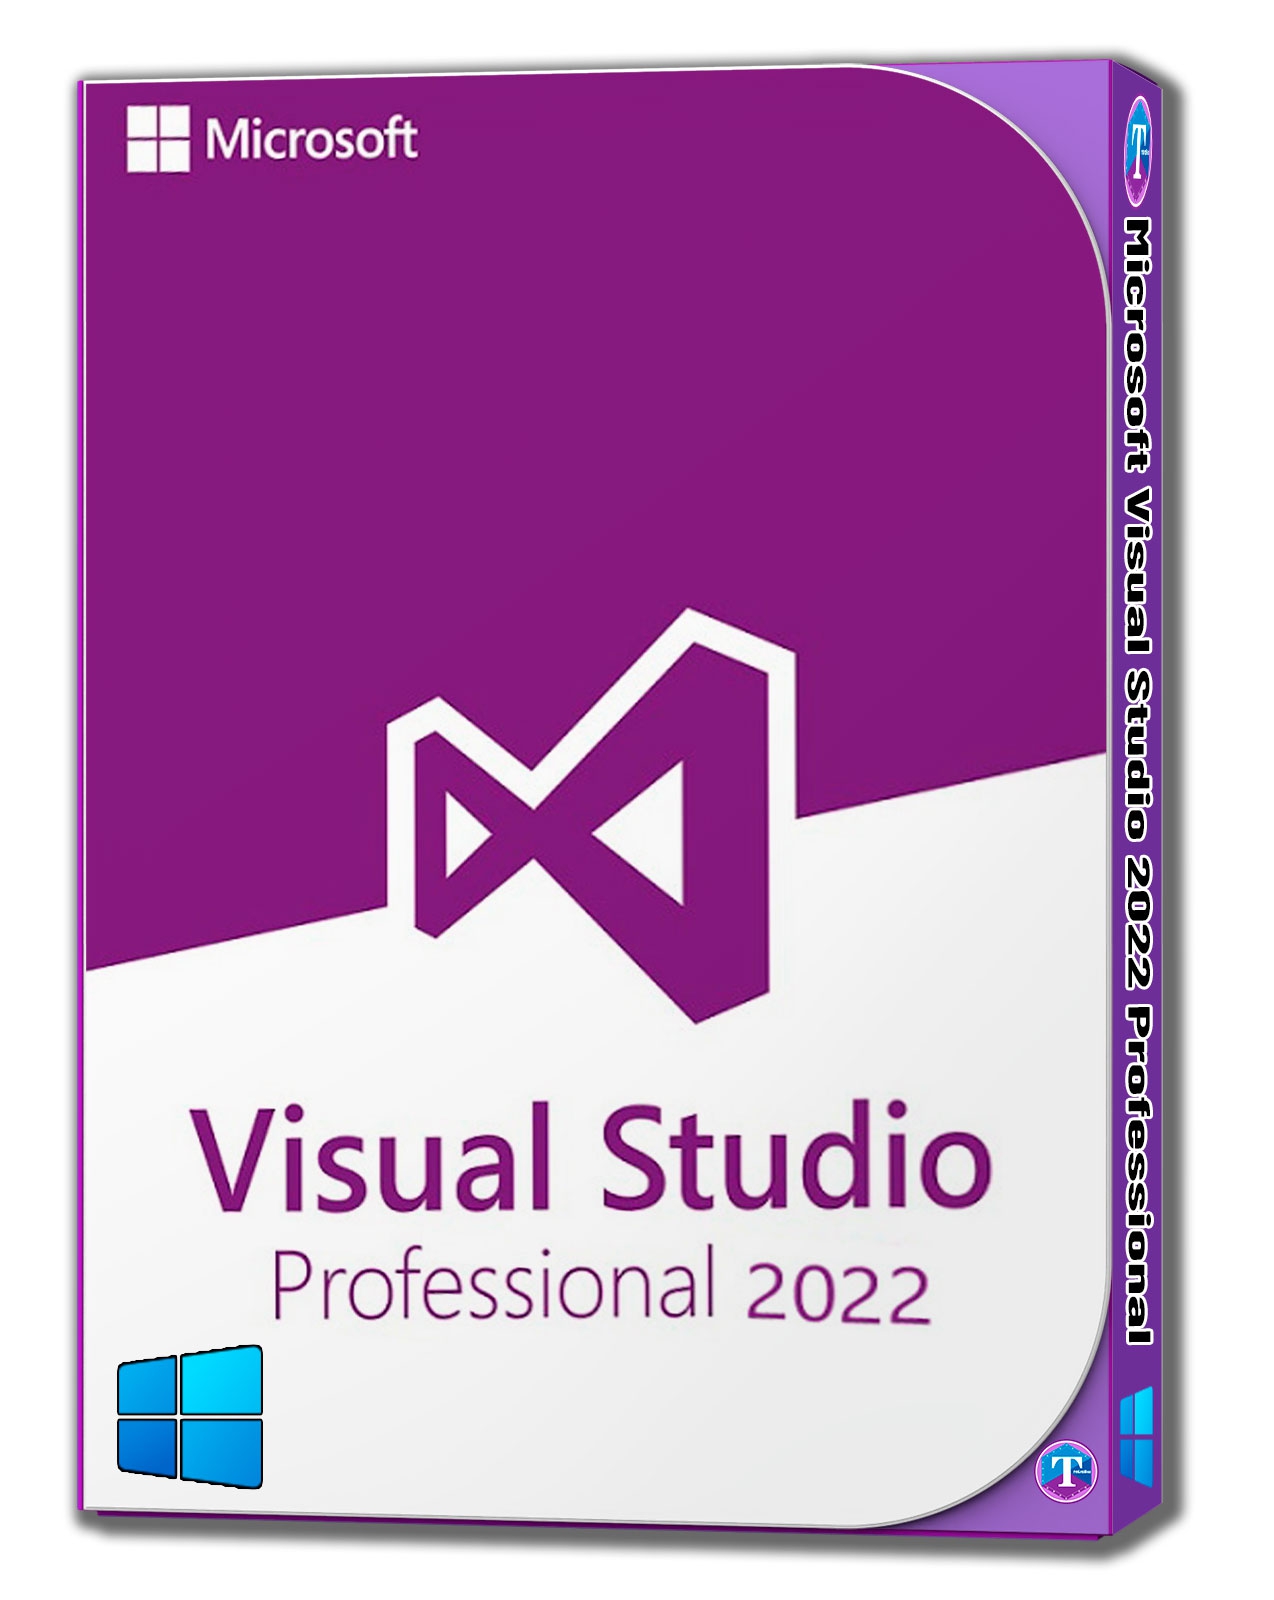 Microsoft Visual Studio 2022 Professional v17.0.6 Multilingual